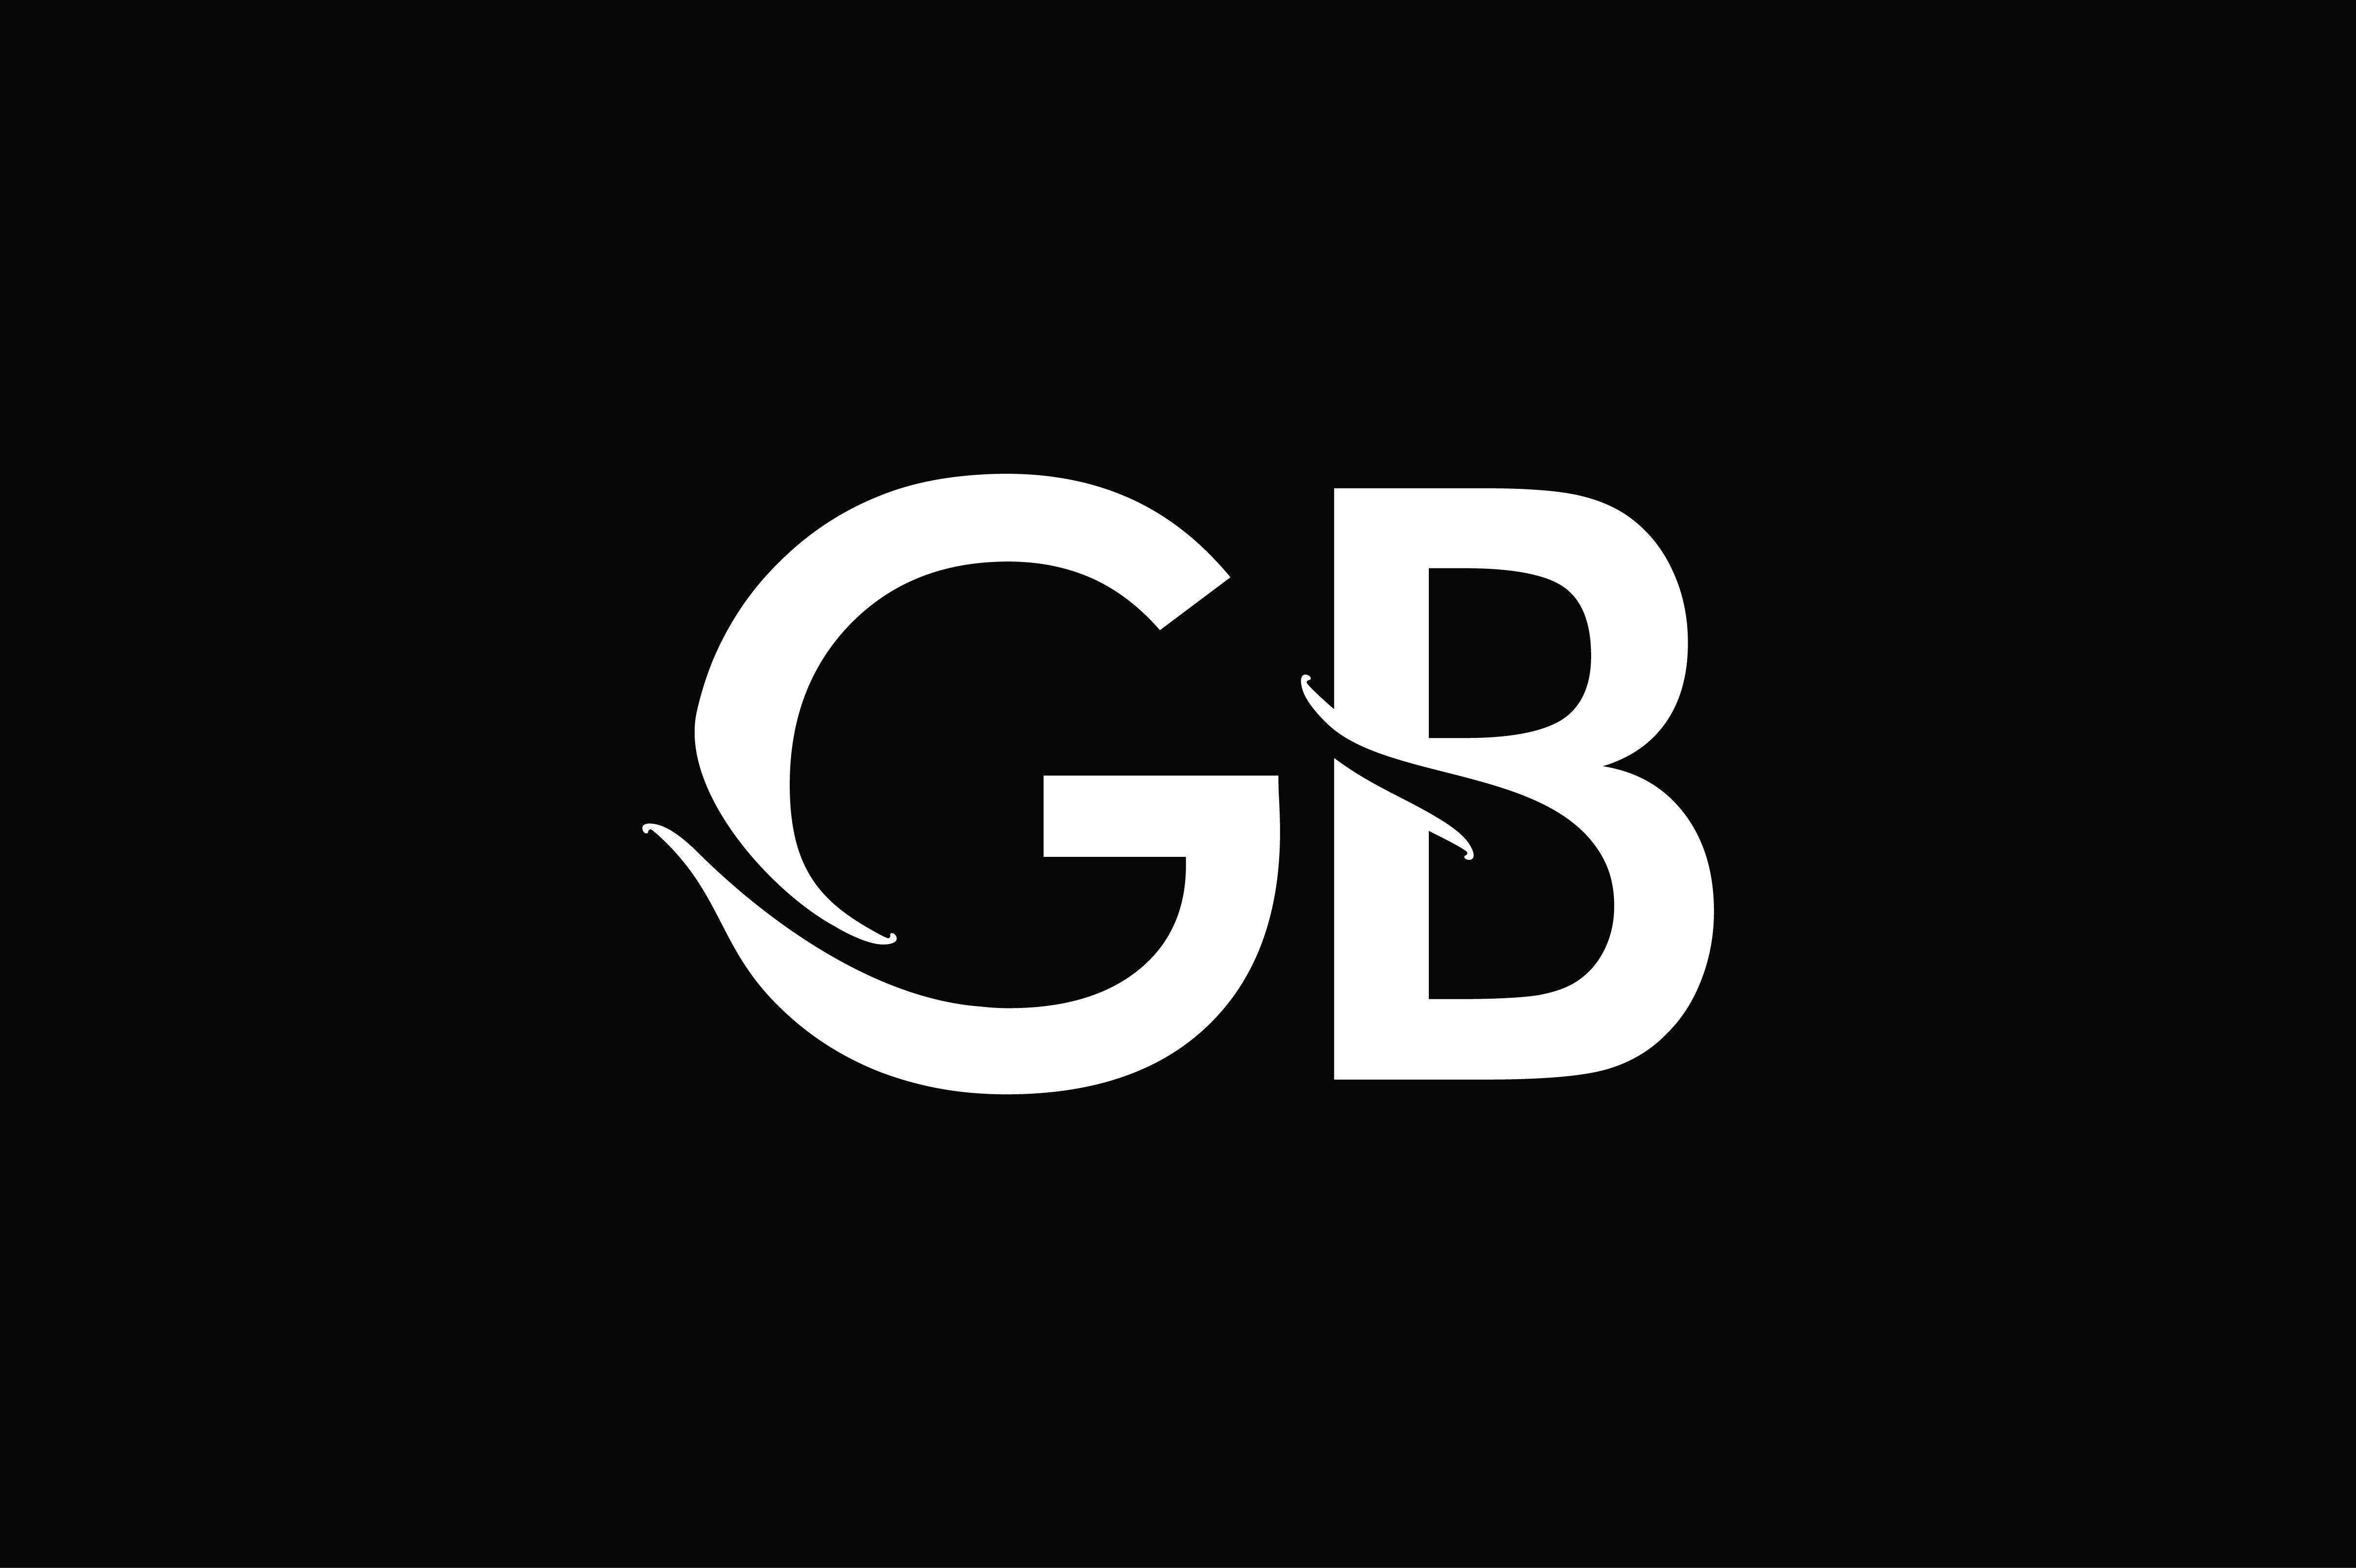 GB Monogram Logo Design By Vectorseller | TheHungryJPEG.com